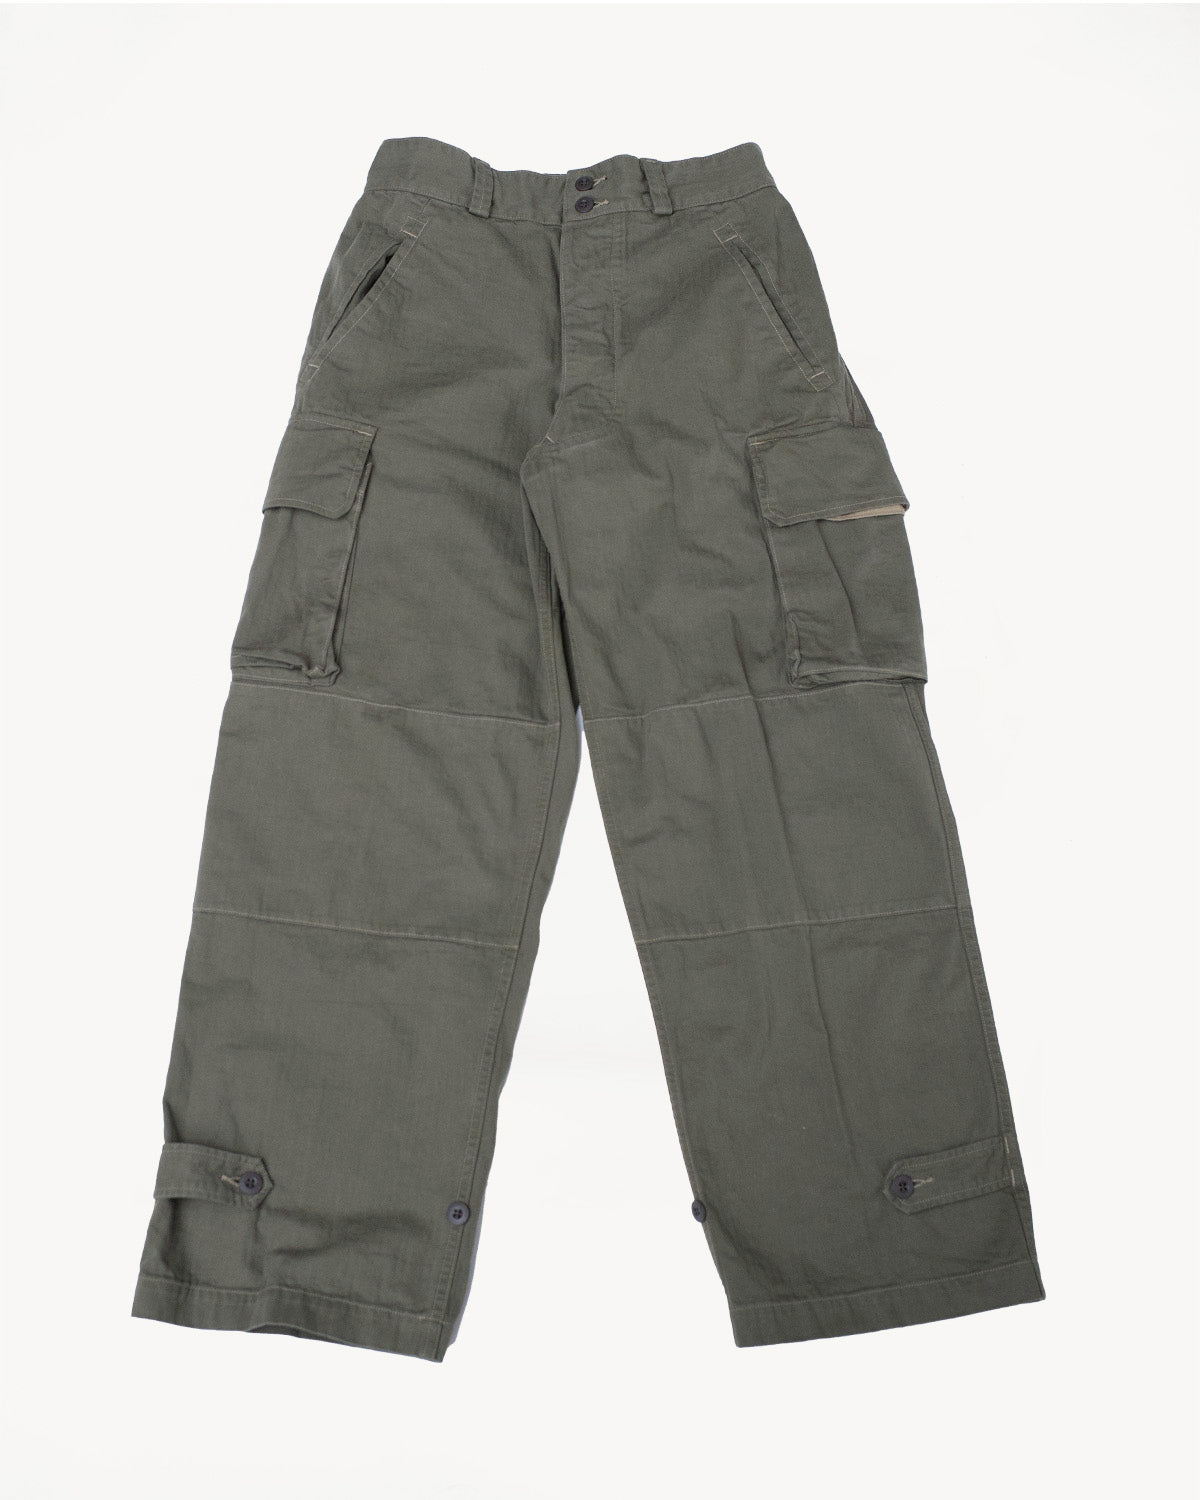 Shop Realtree Kids Camo 6 Pocket Pant